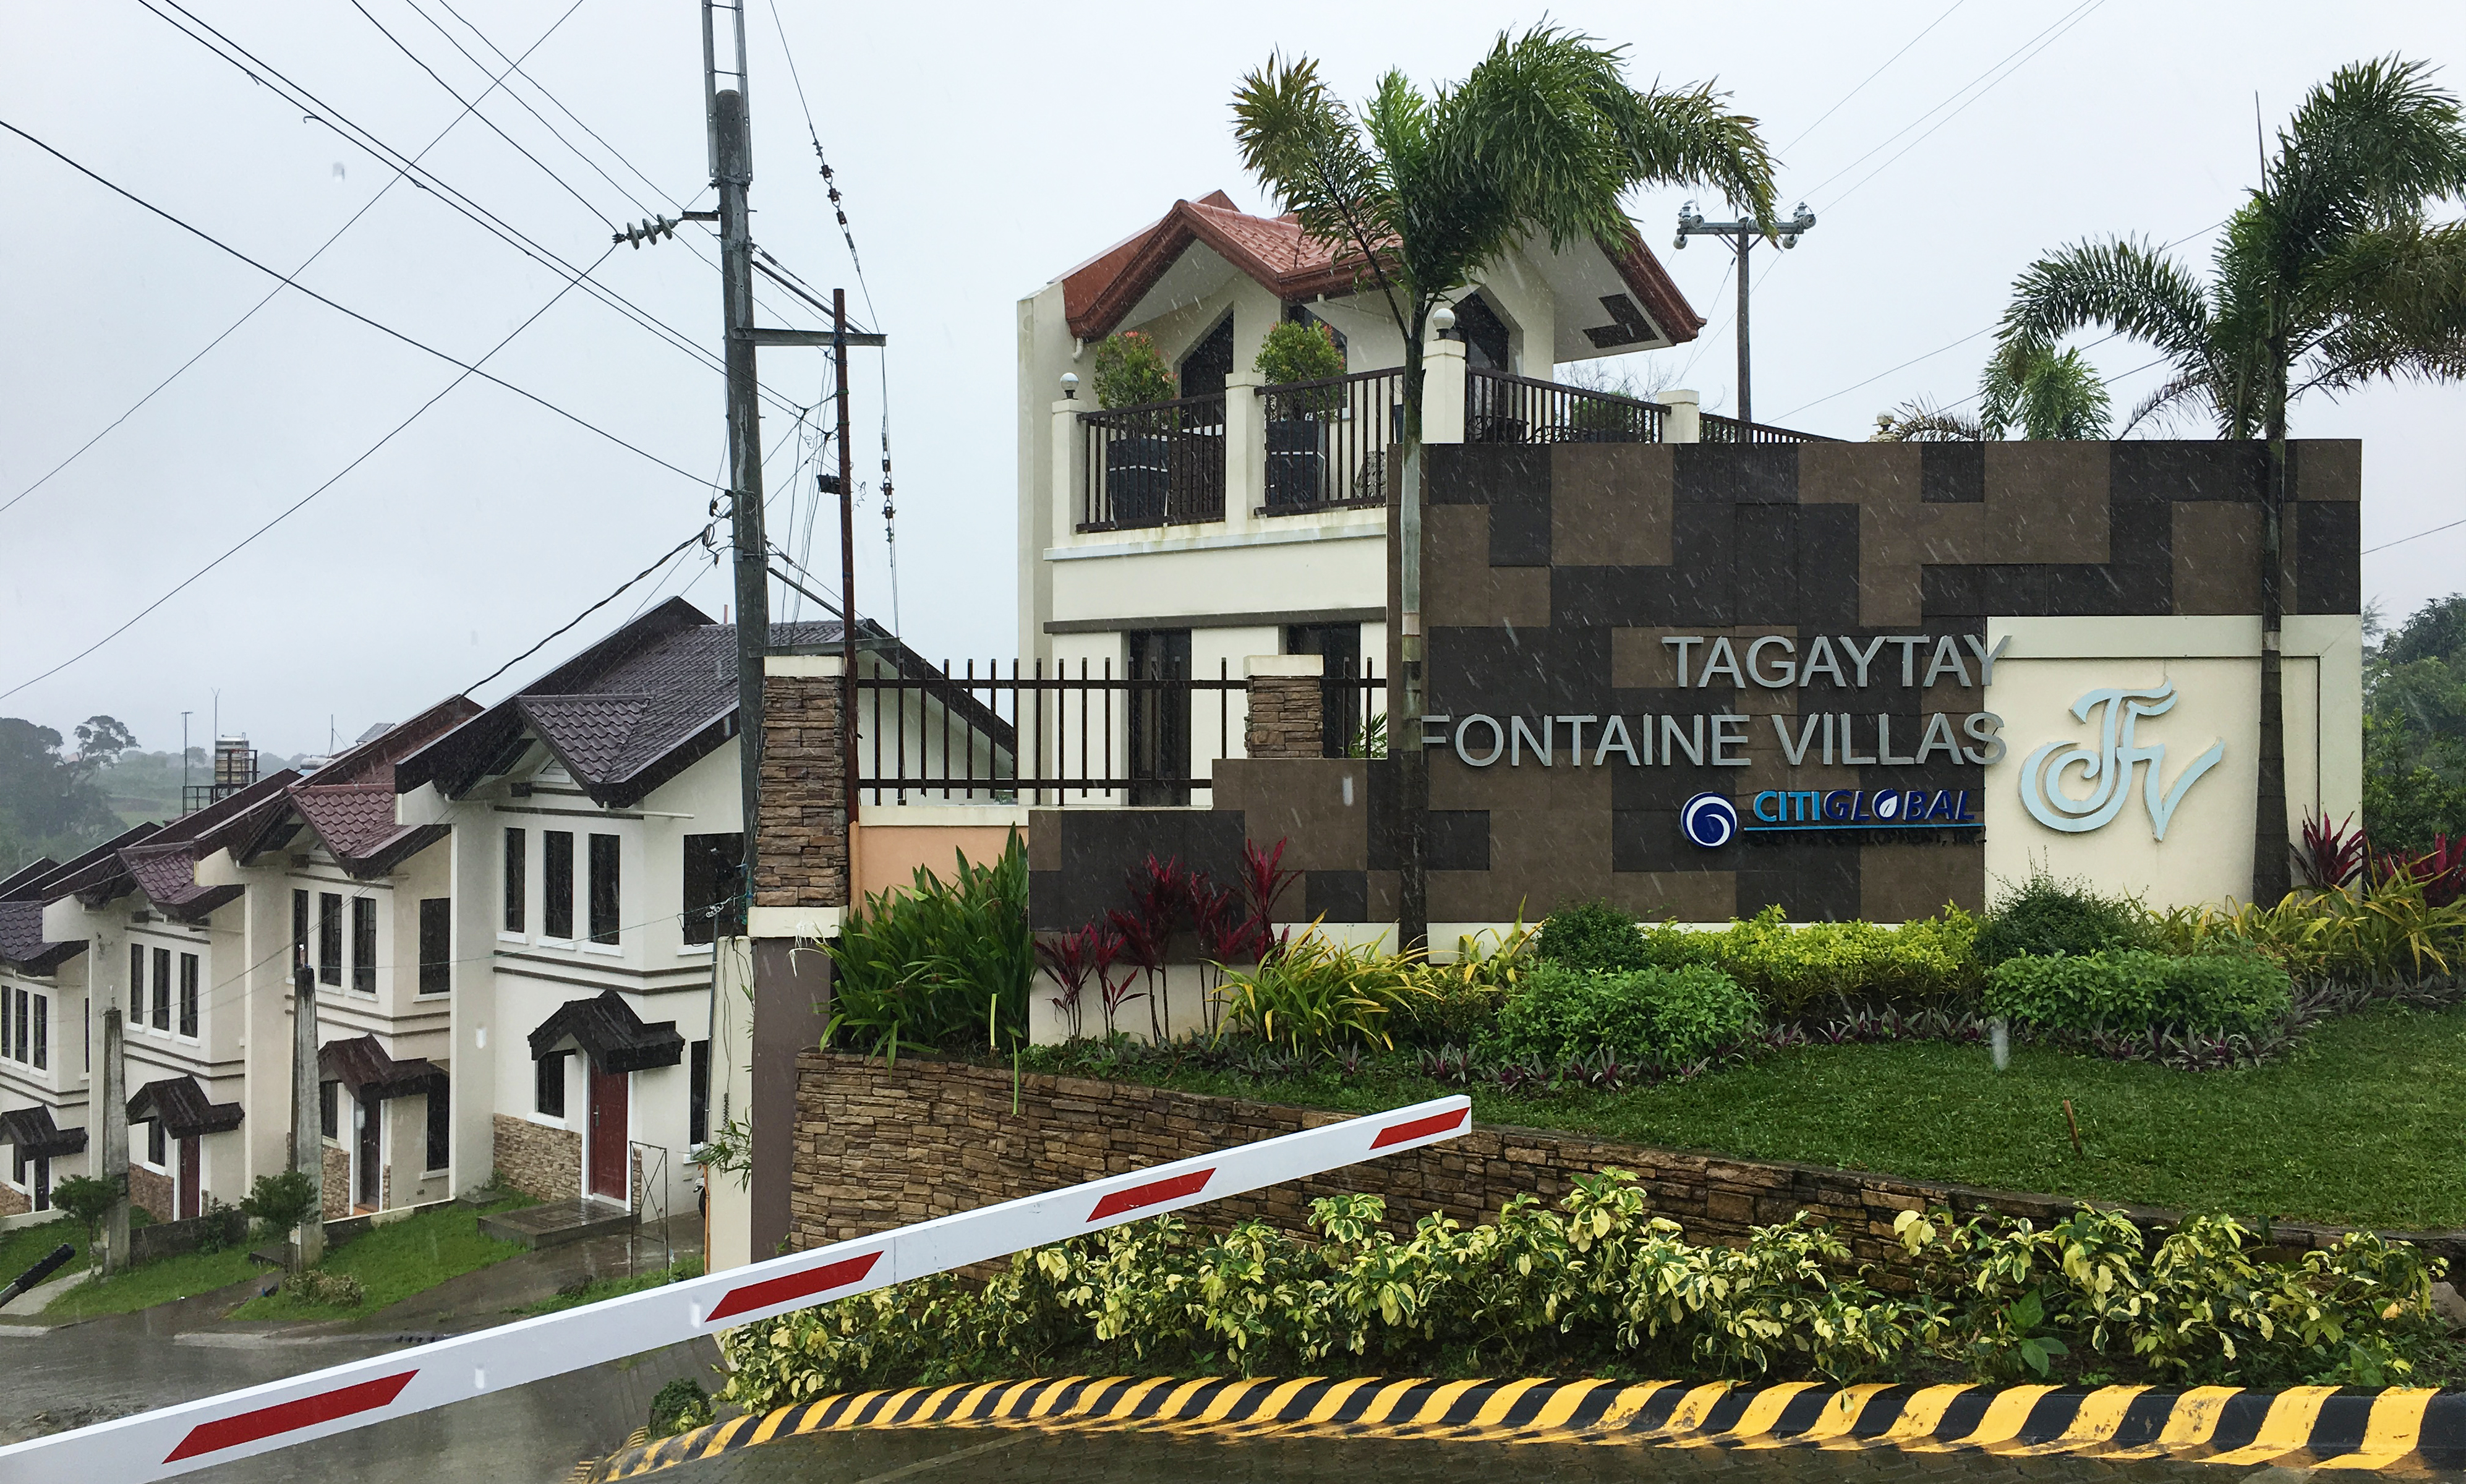 Entrance of Tagaytay Fontaine Villas